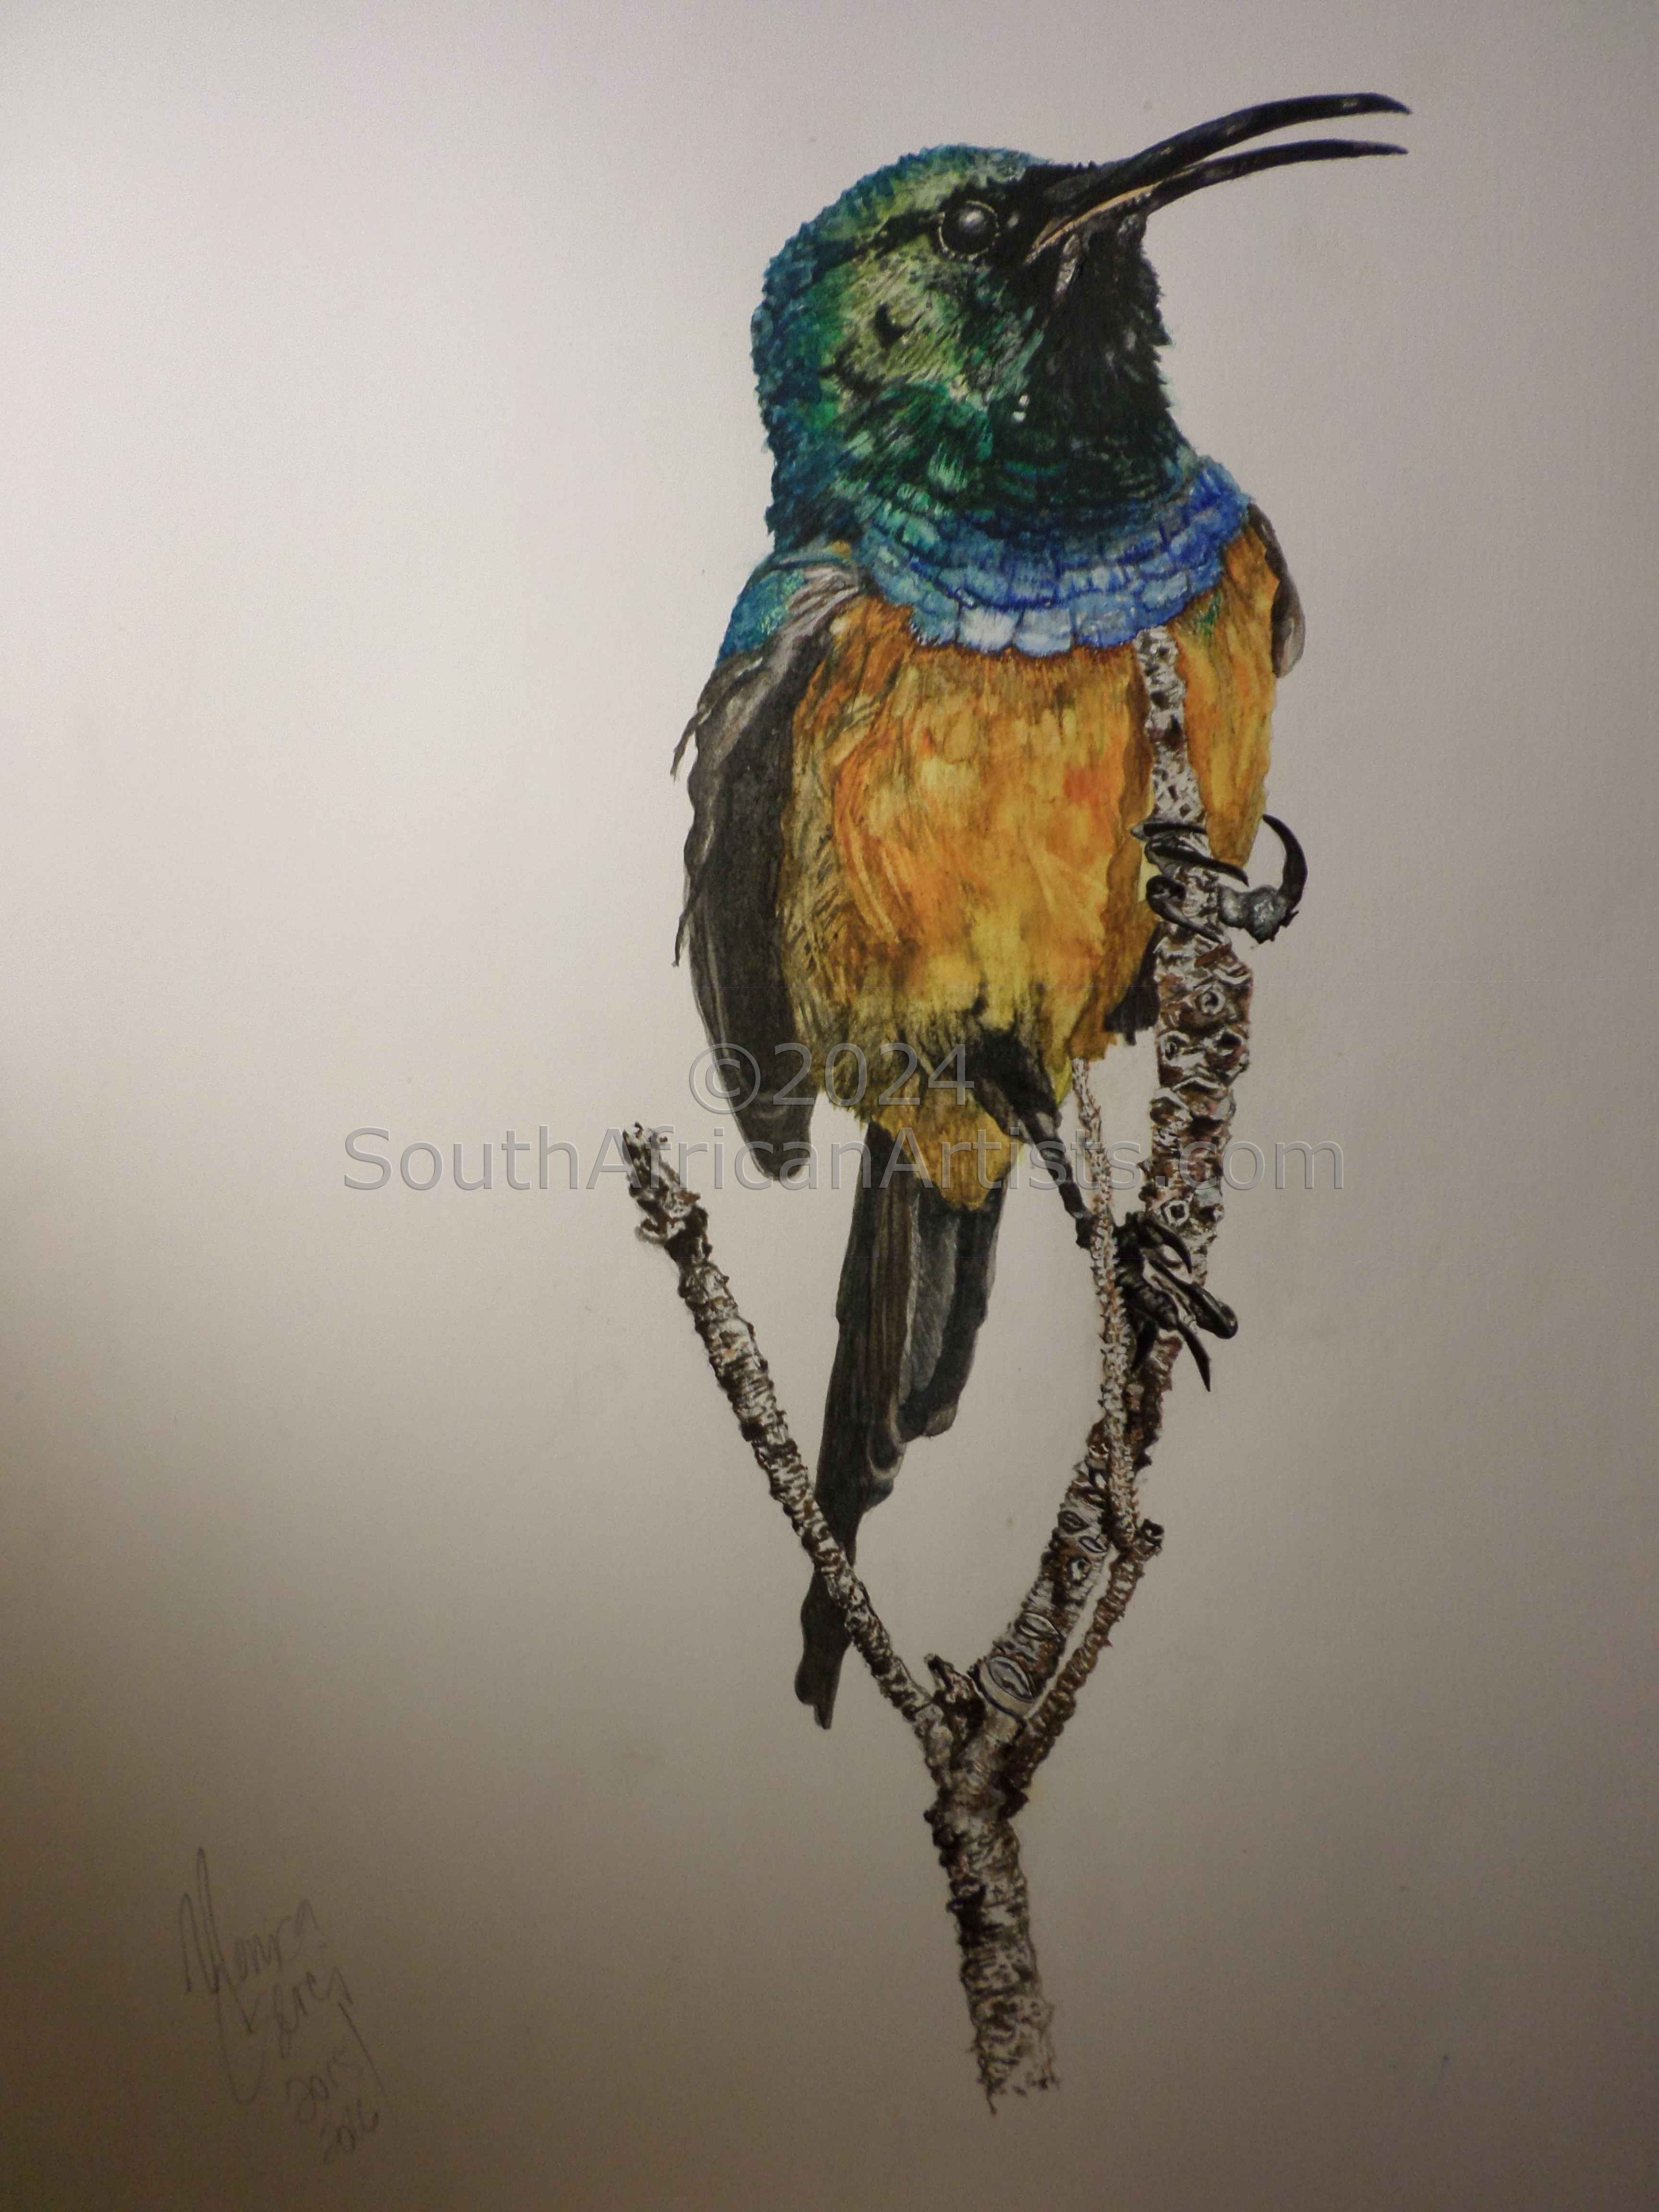 Orange-Breasted Sunbird